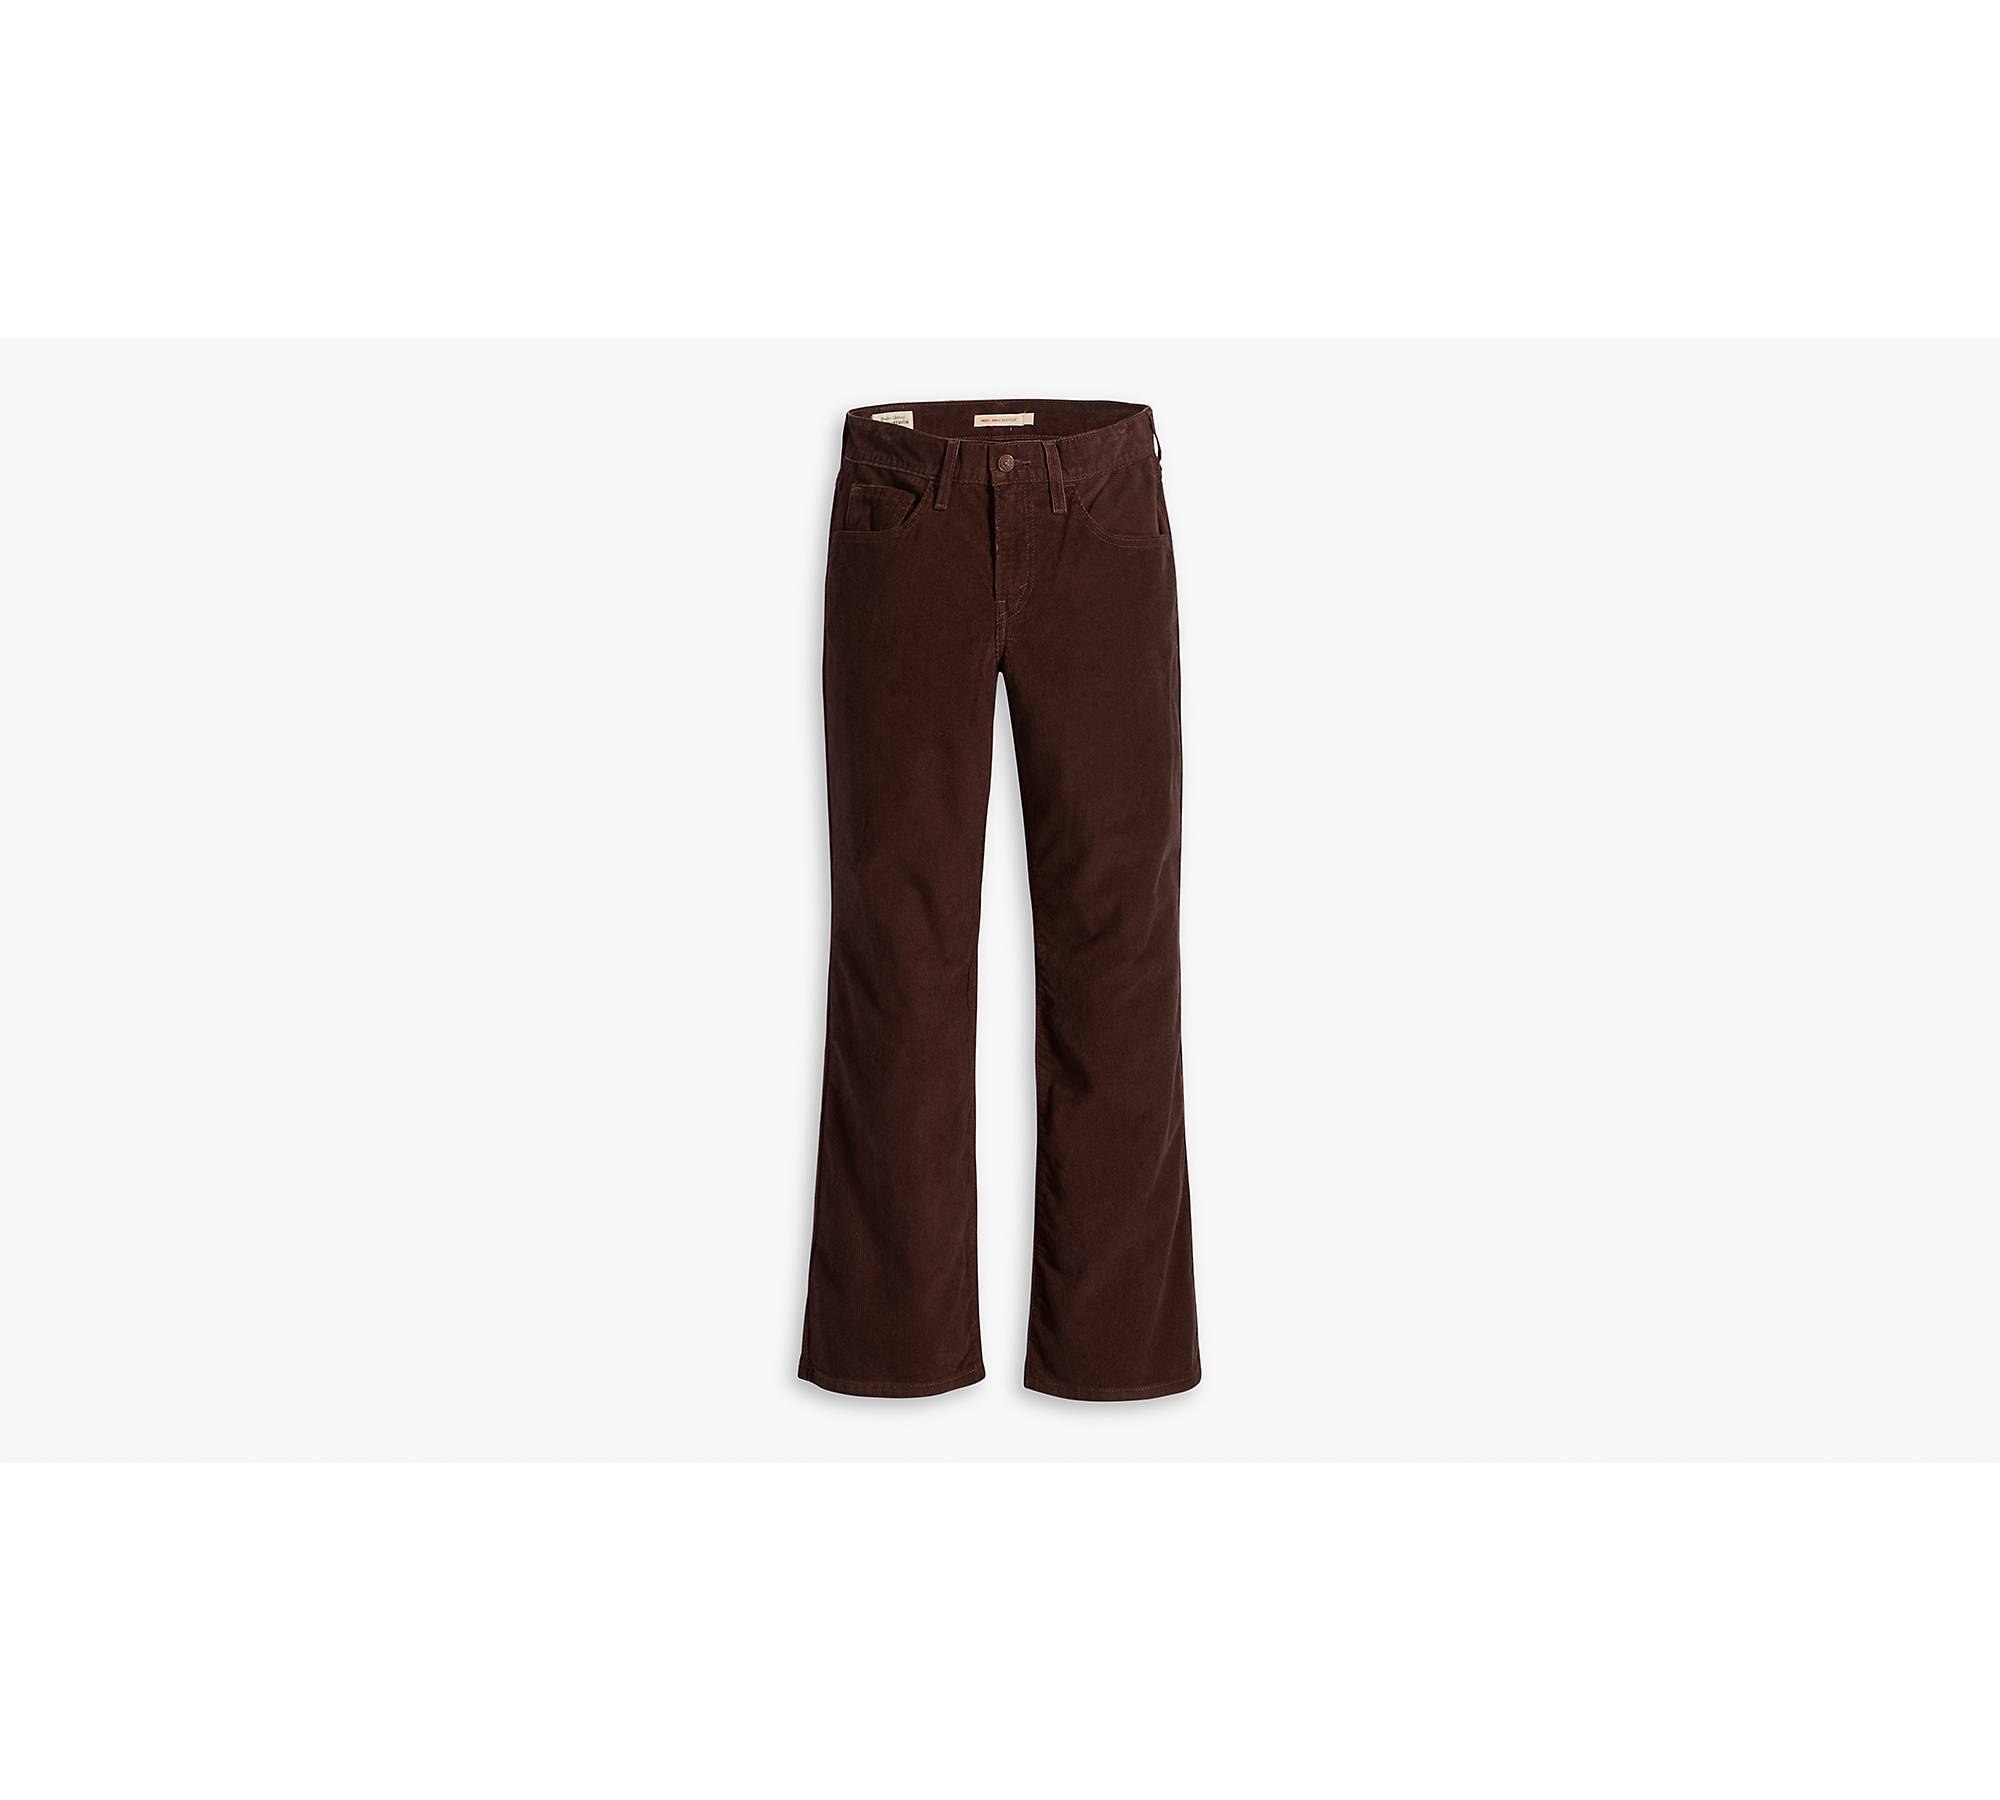 Corduroy bootcut trousers, length 31.5, navy, Anne Weyburn